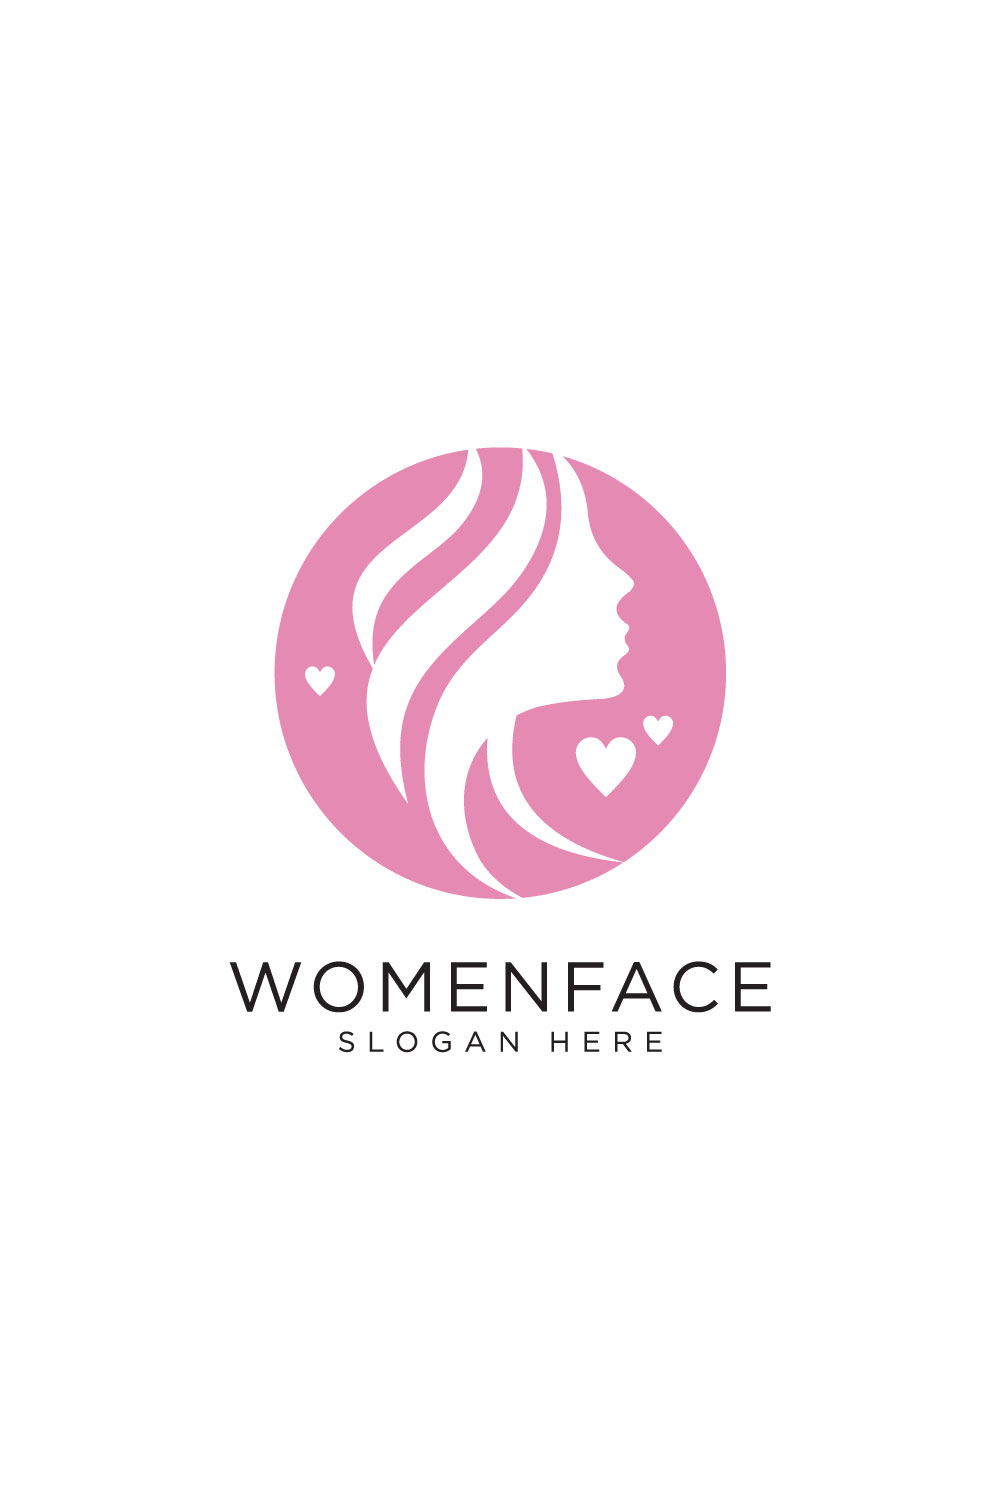 woman face beauty logo design vector pinterest preview image.